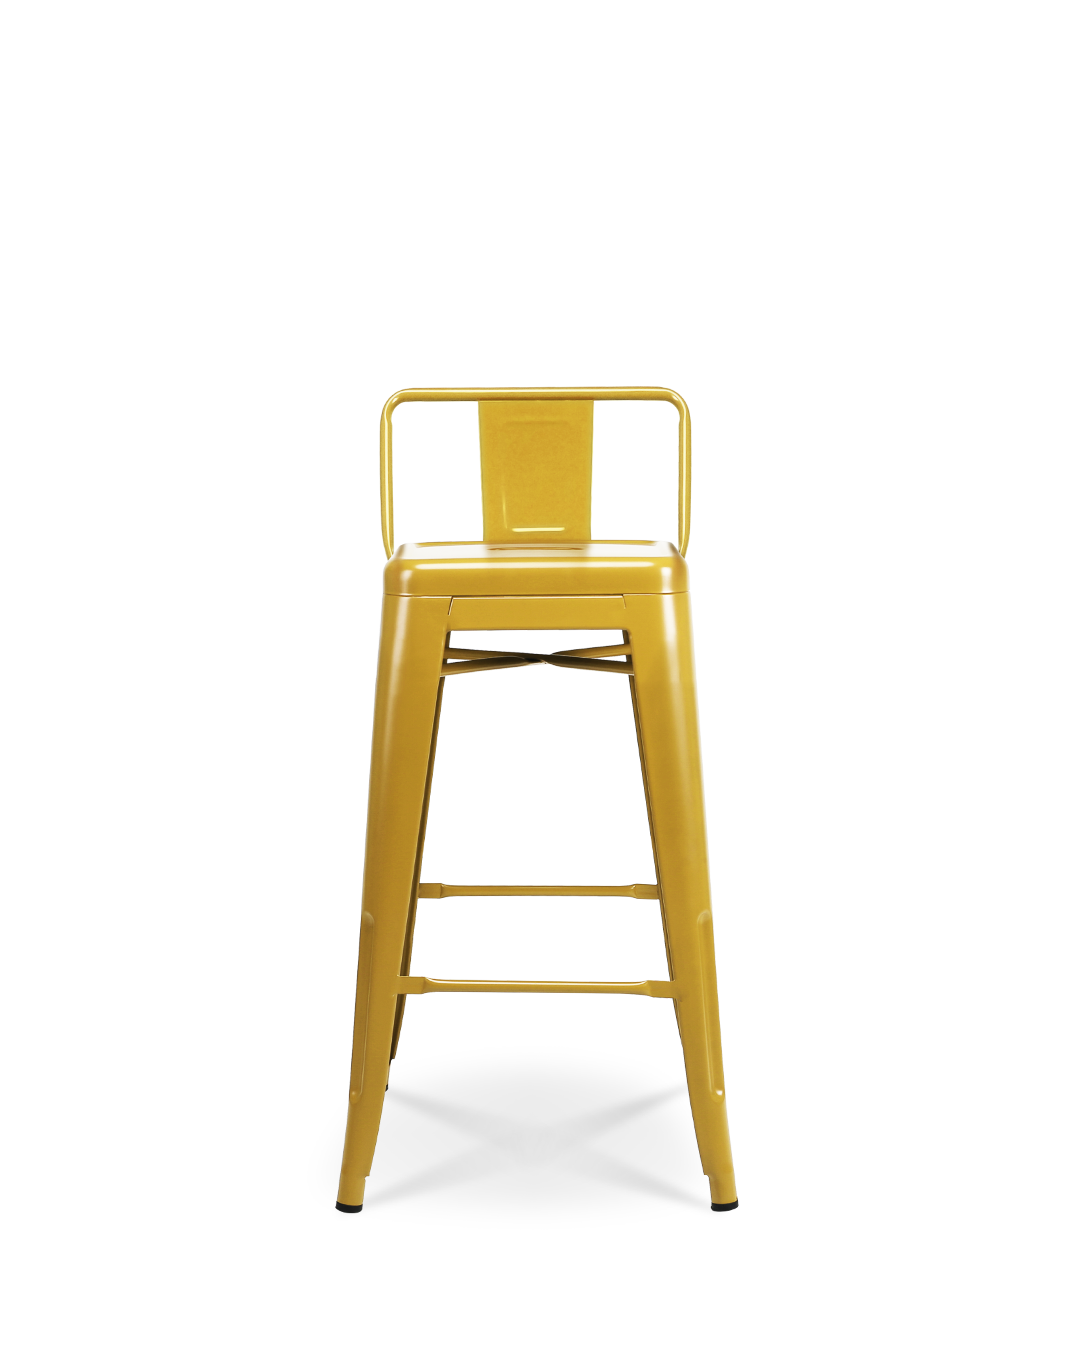 Chaise de comptoir en métal Lix jaune